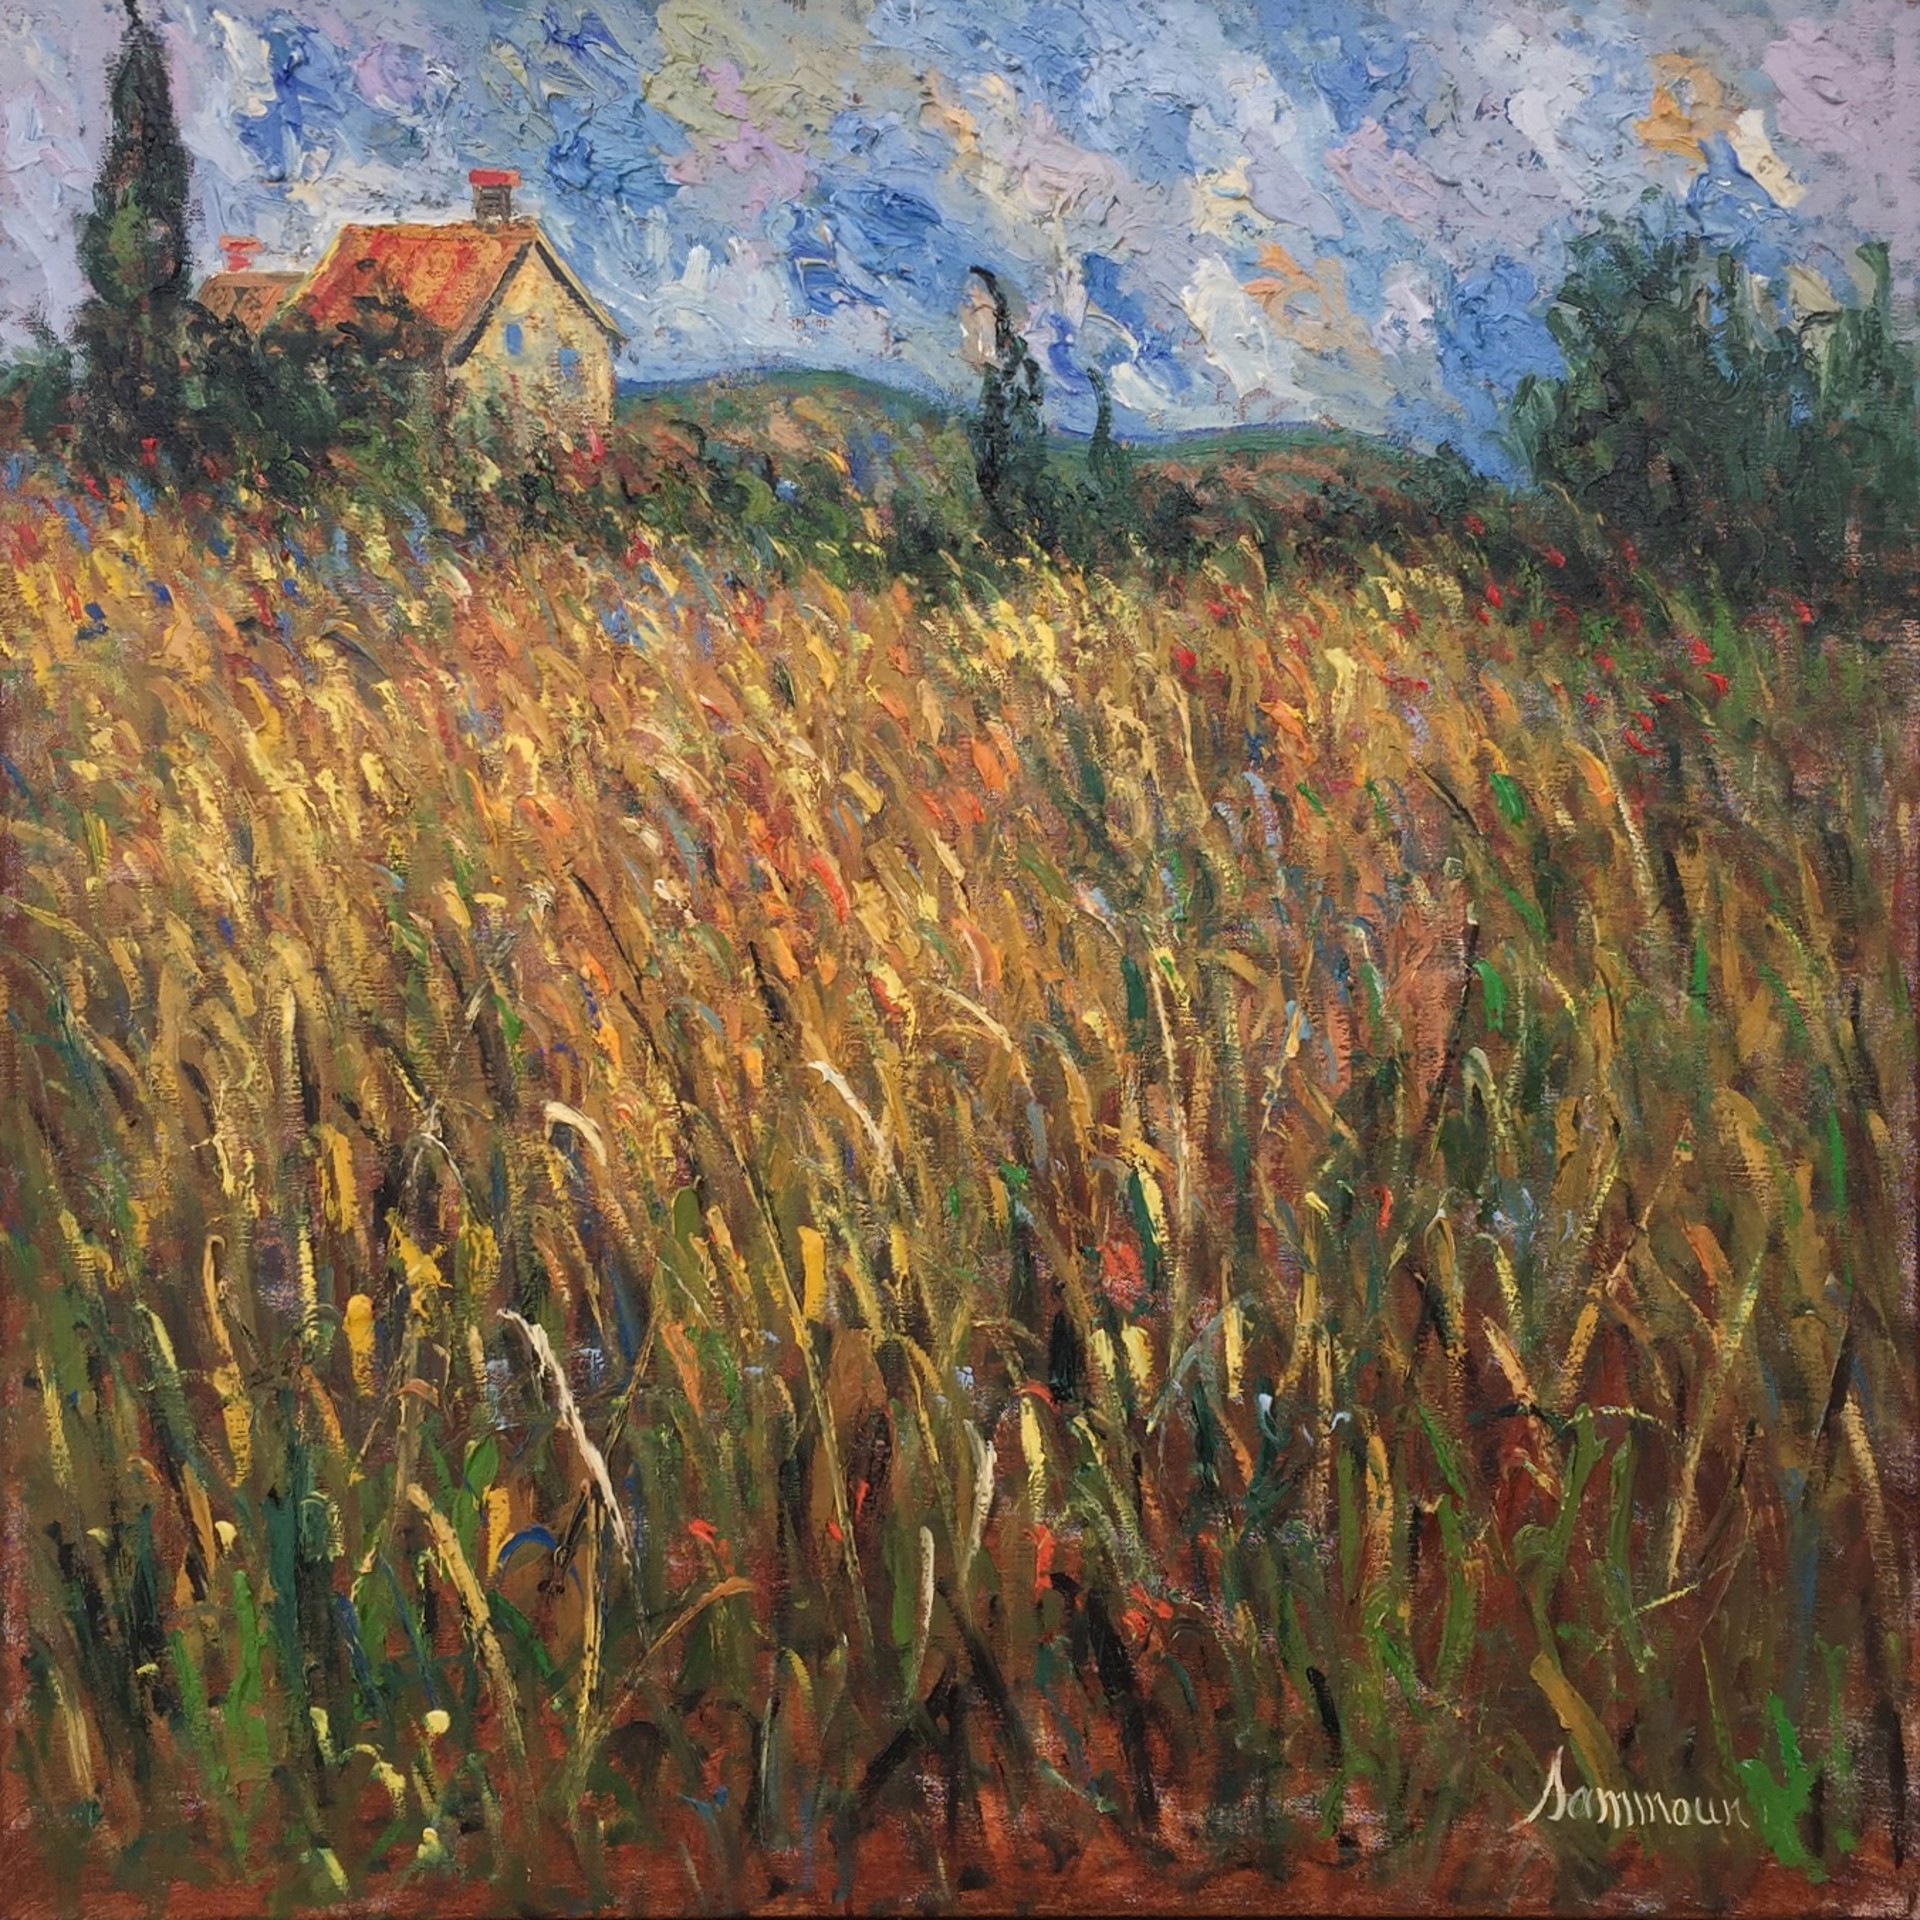 Wheat Field and Farm House by Samir Sammoun